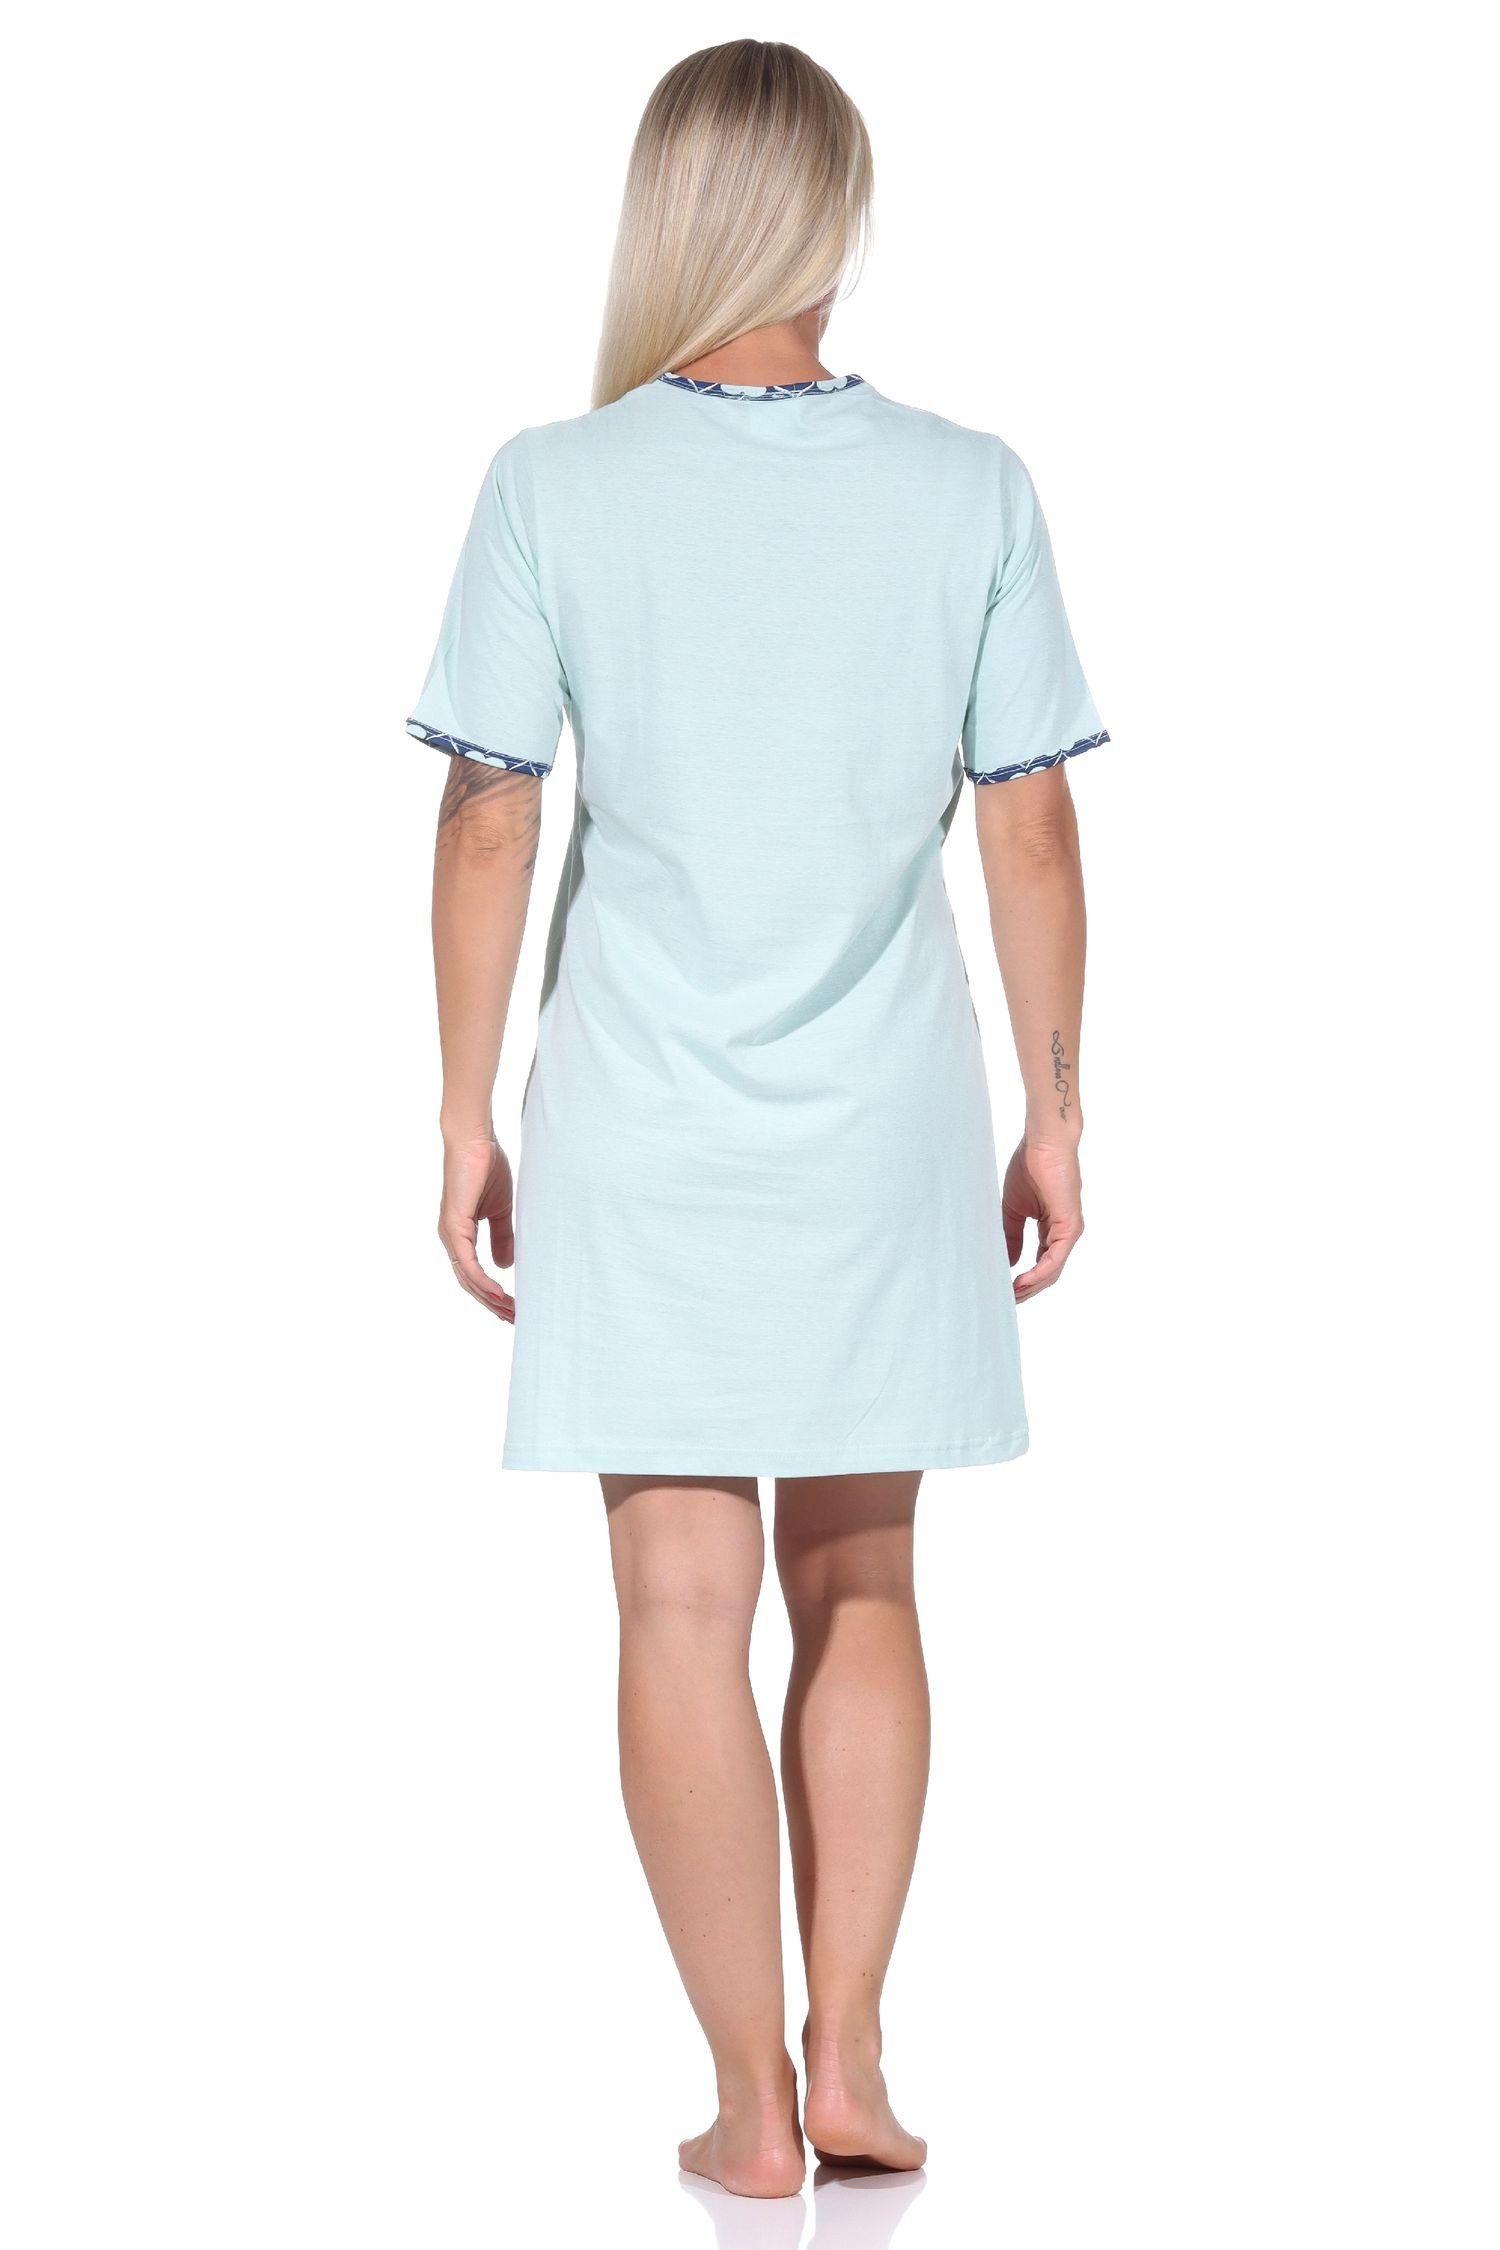 Nachthemd türkis Nachthemd - 603 Cooles Damen kurzarm 10 Herz RELAX by Normann Motiv 122 mit Bigshirt